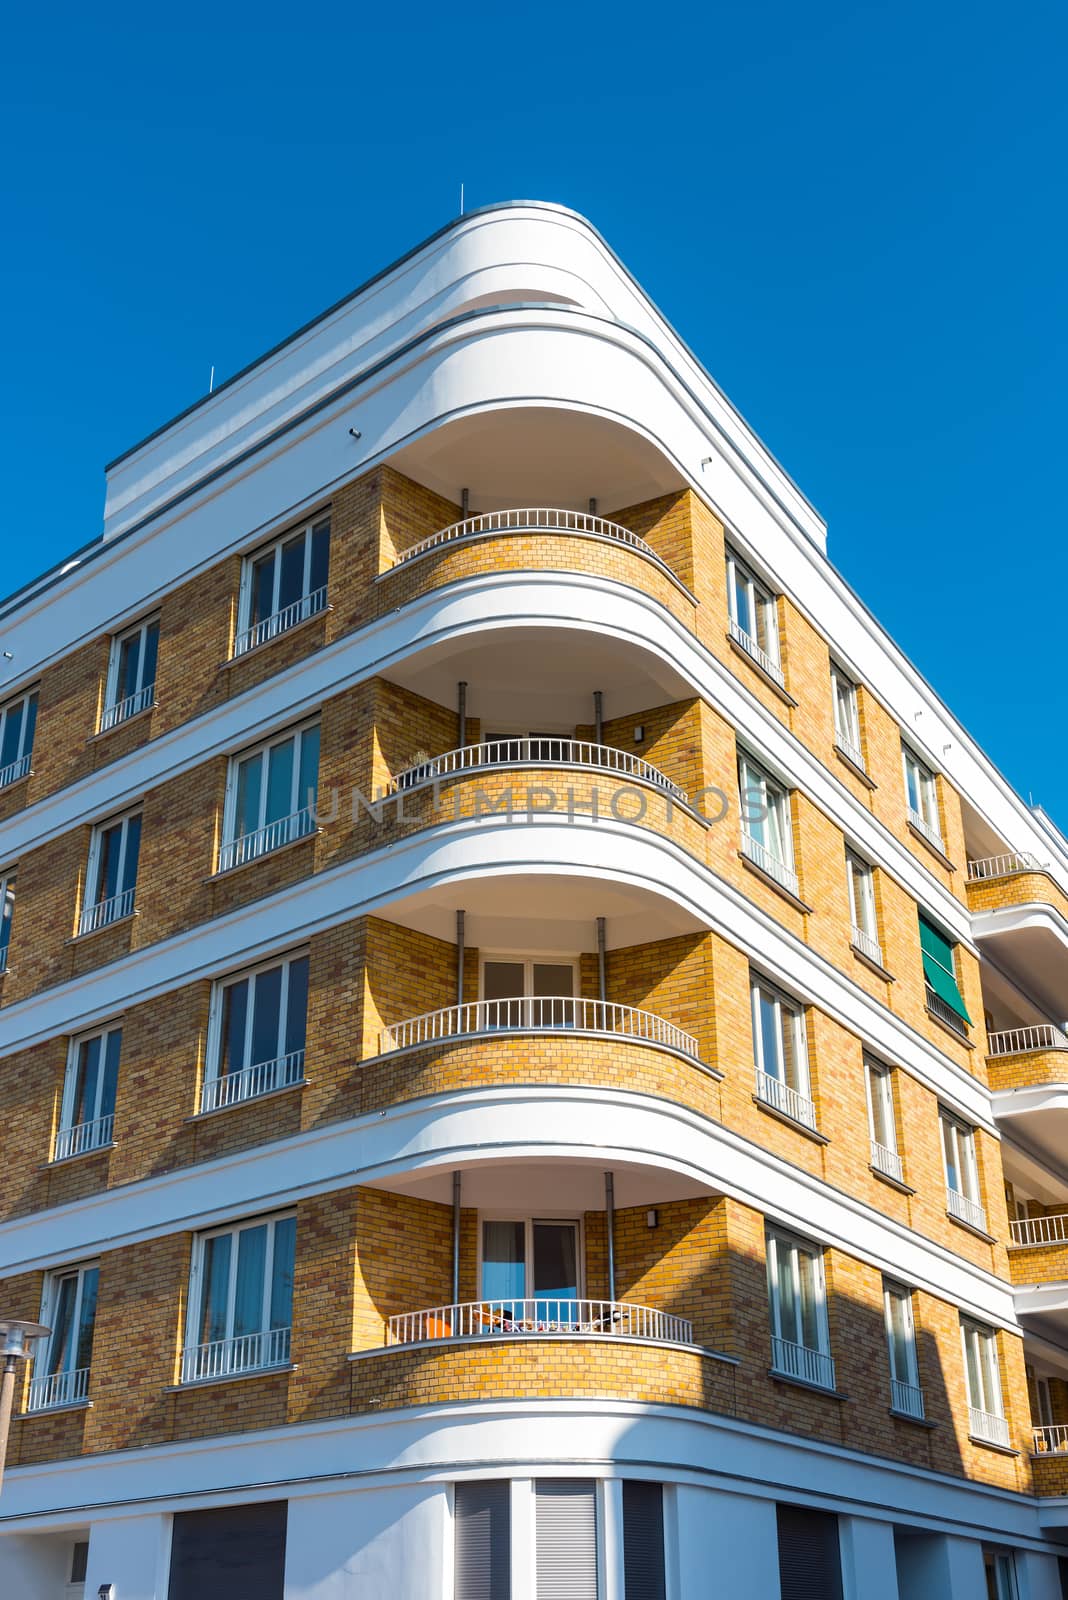 Modern apartment houses in Berlin by elxeneize